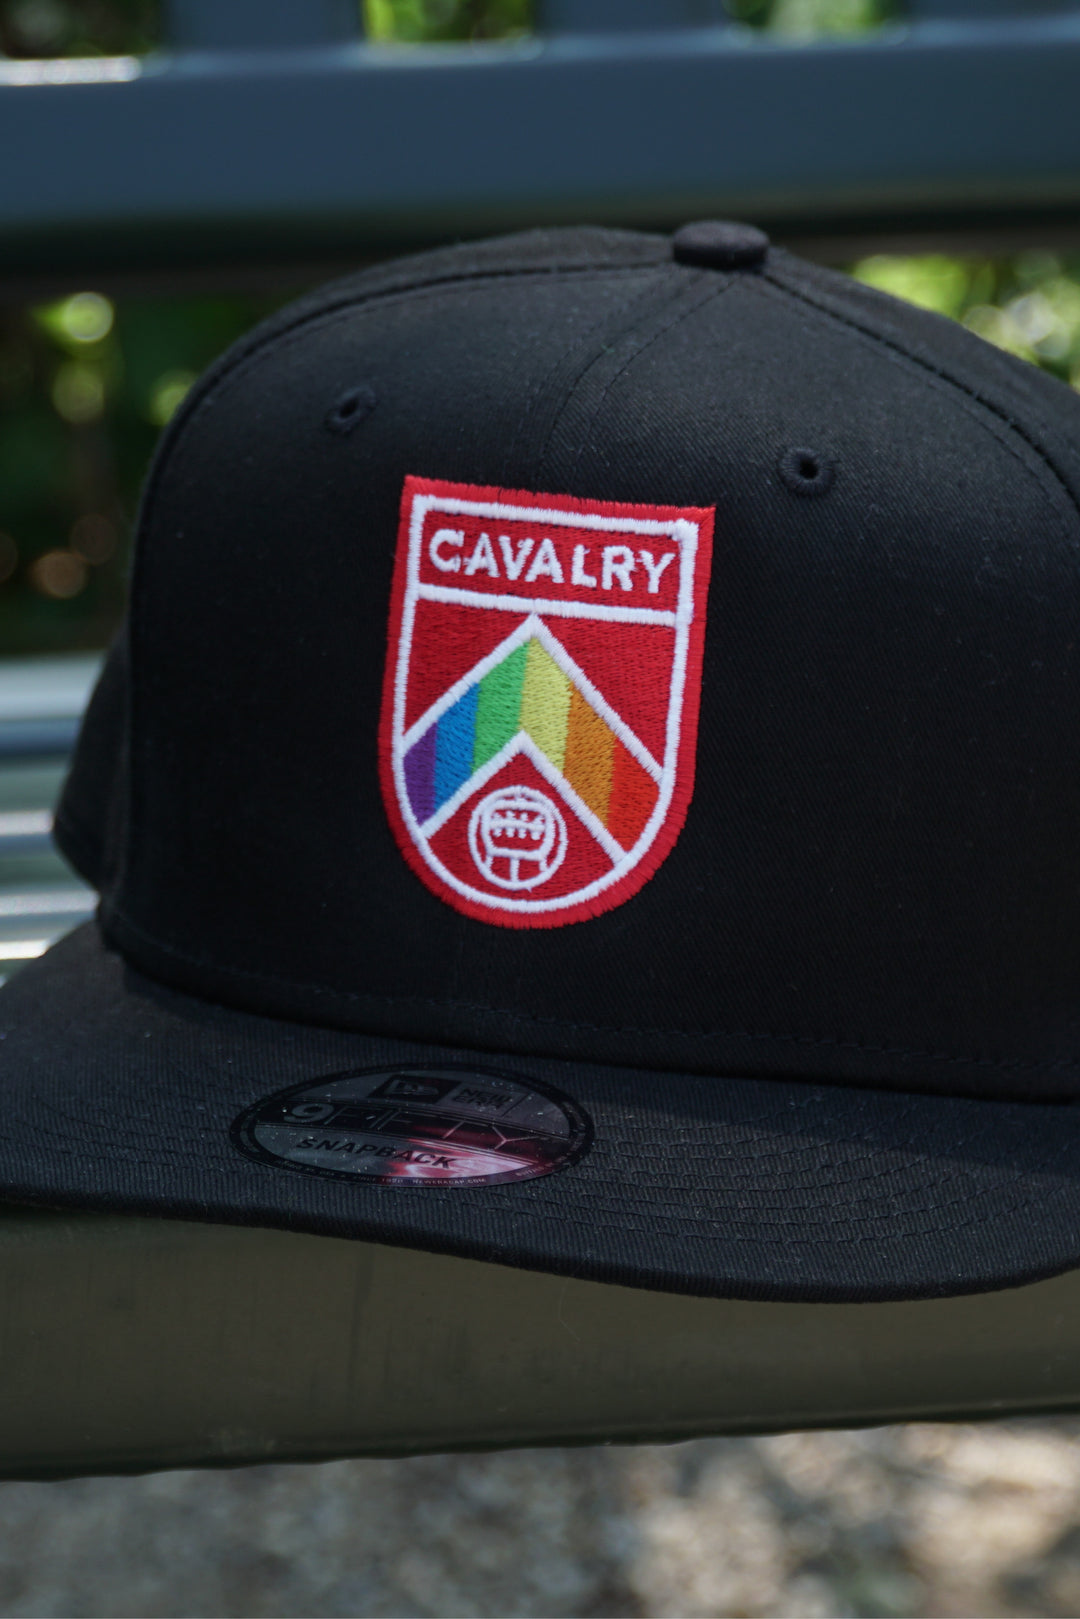 Ball Cap with Pride Cavalry Crest